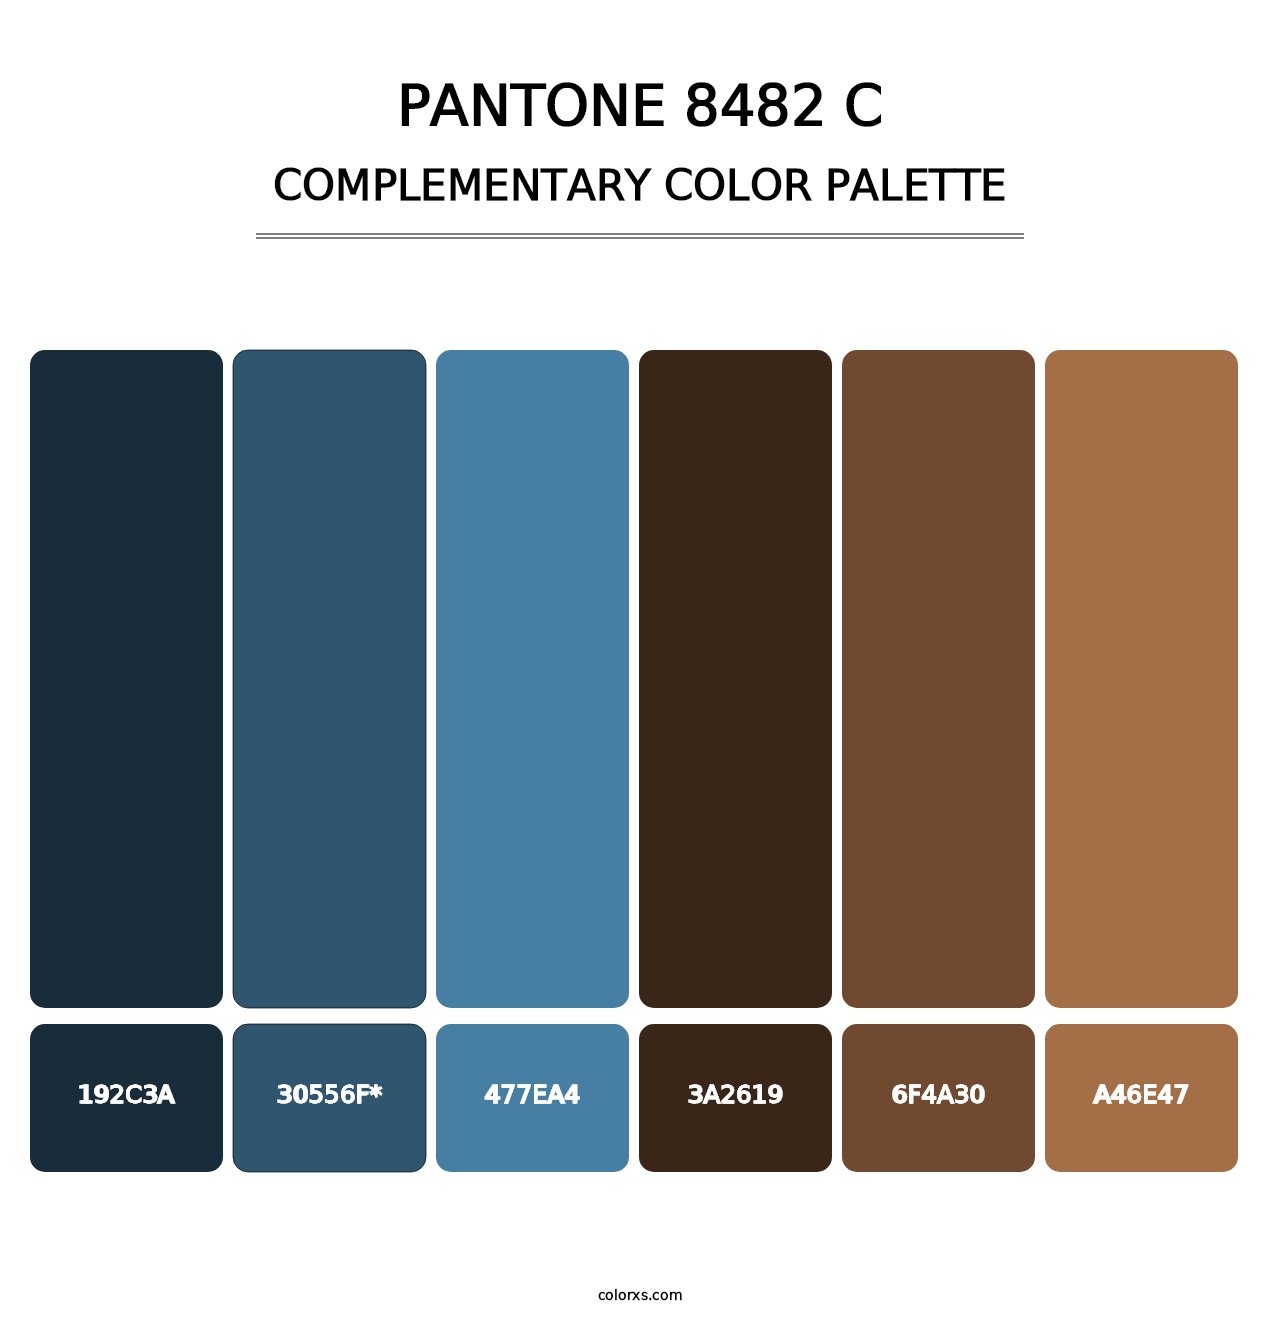 PANTONE 8482 C - Complementary Color Palette